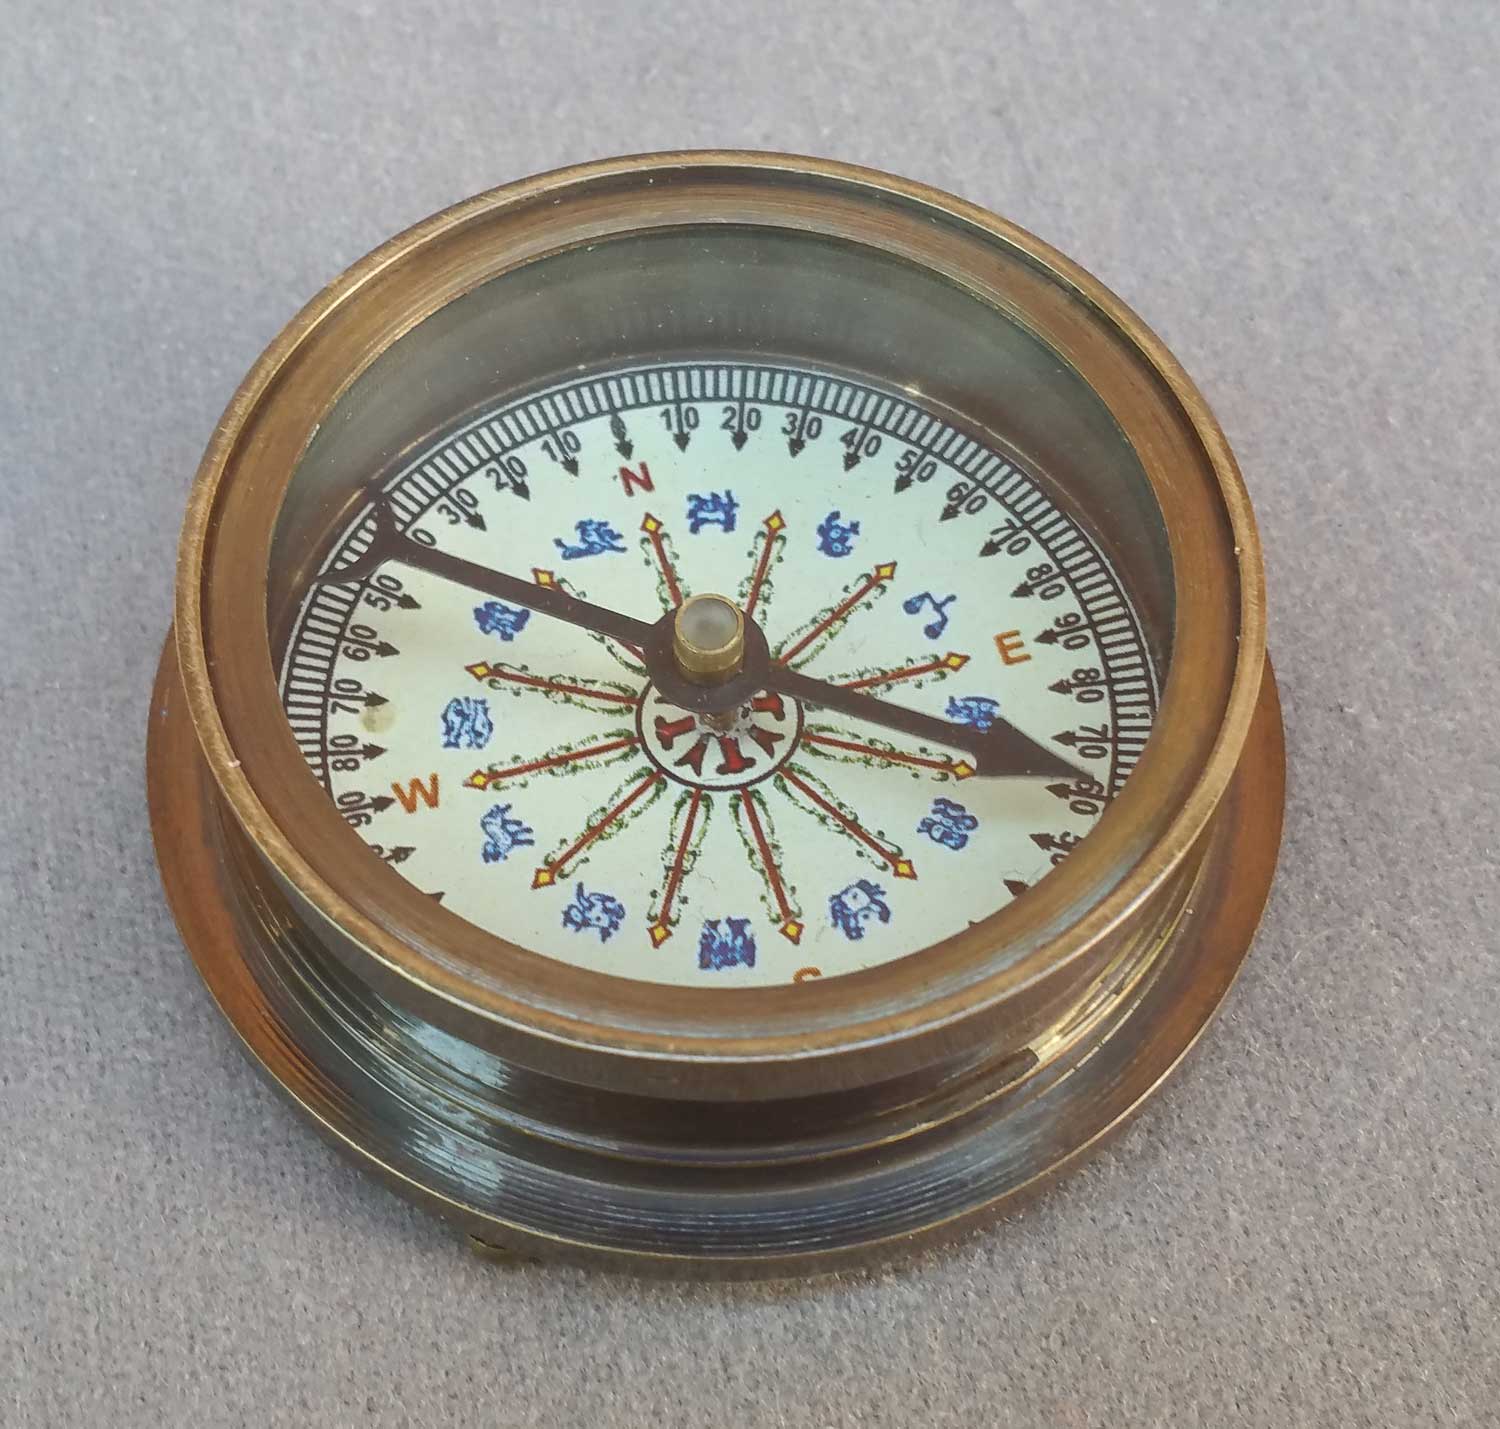 Compass with Century Calendar - Click Image to Close